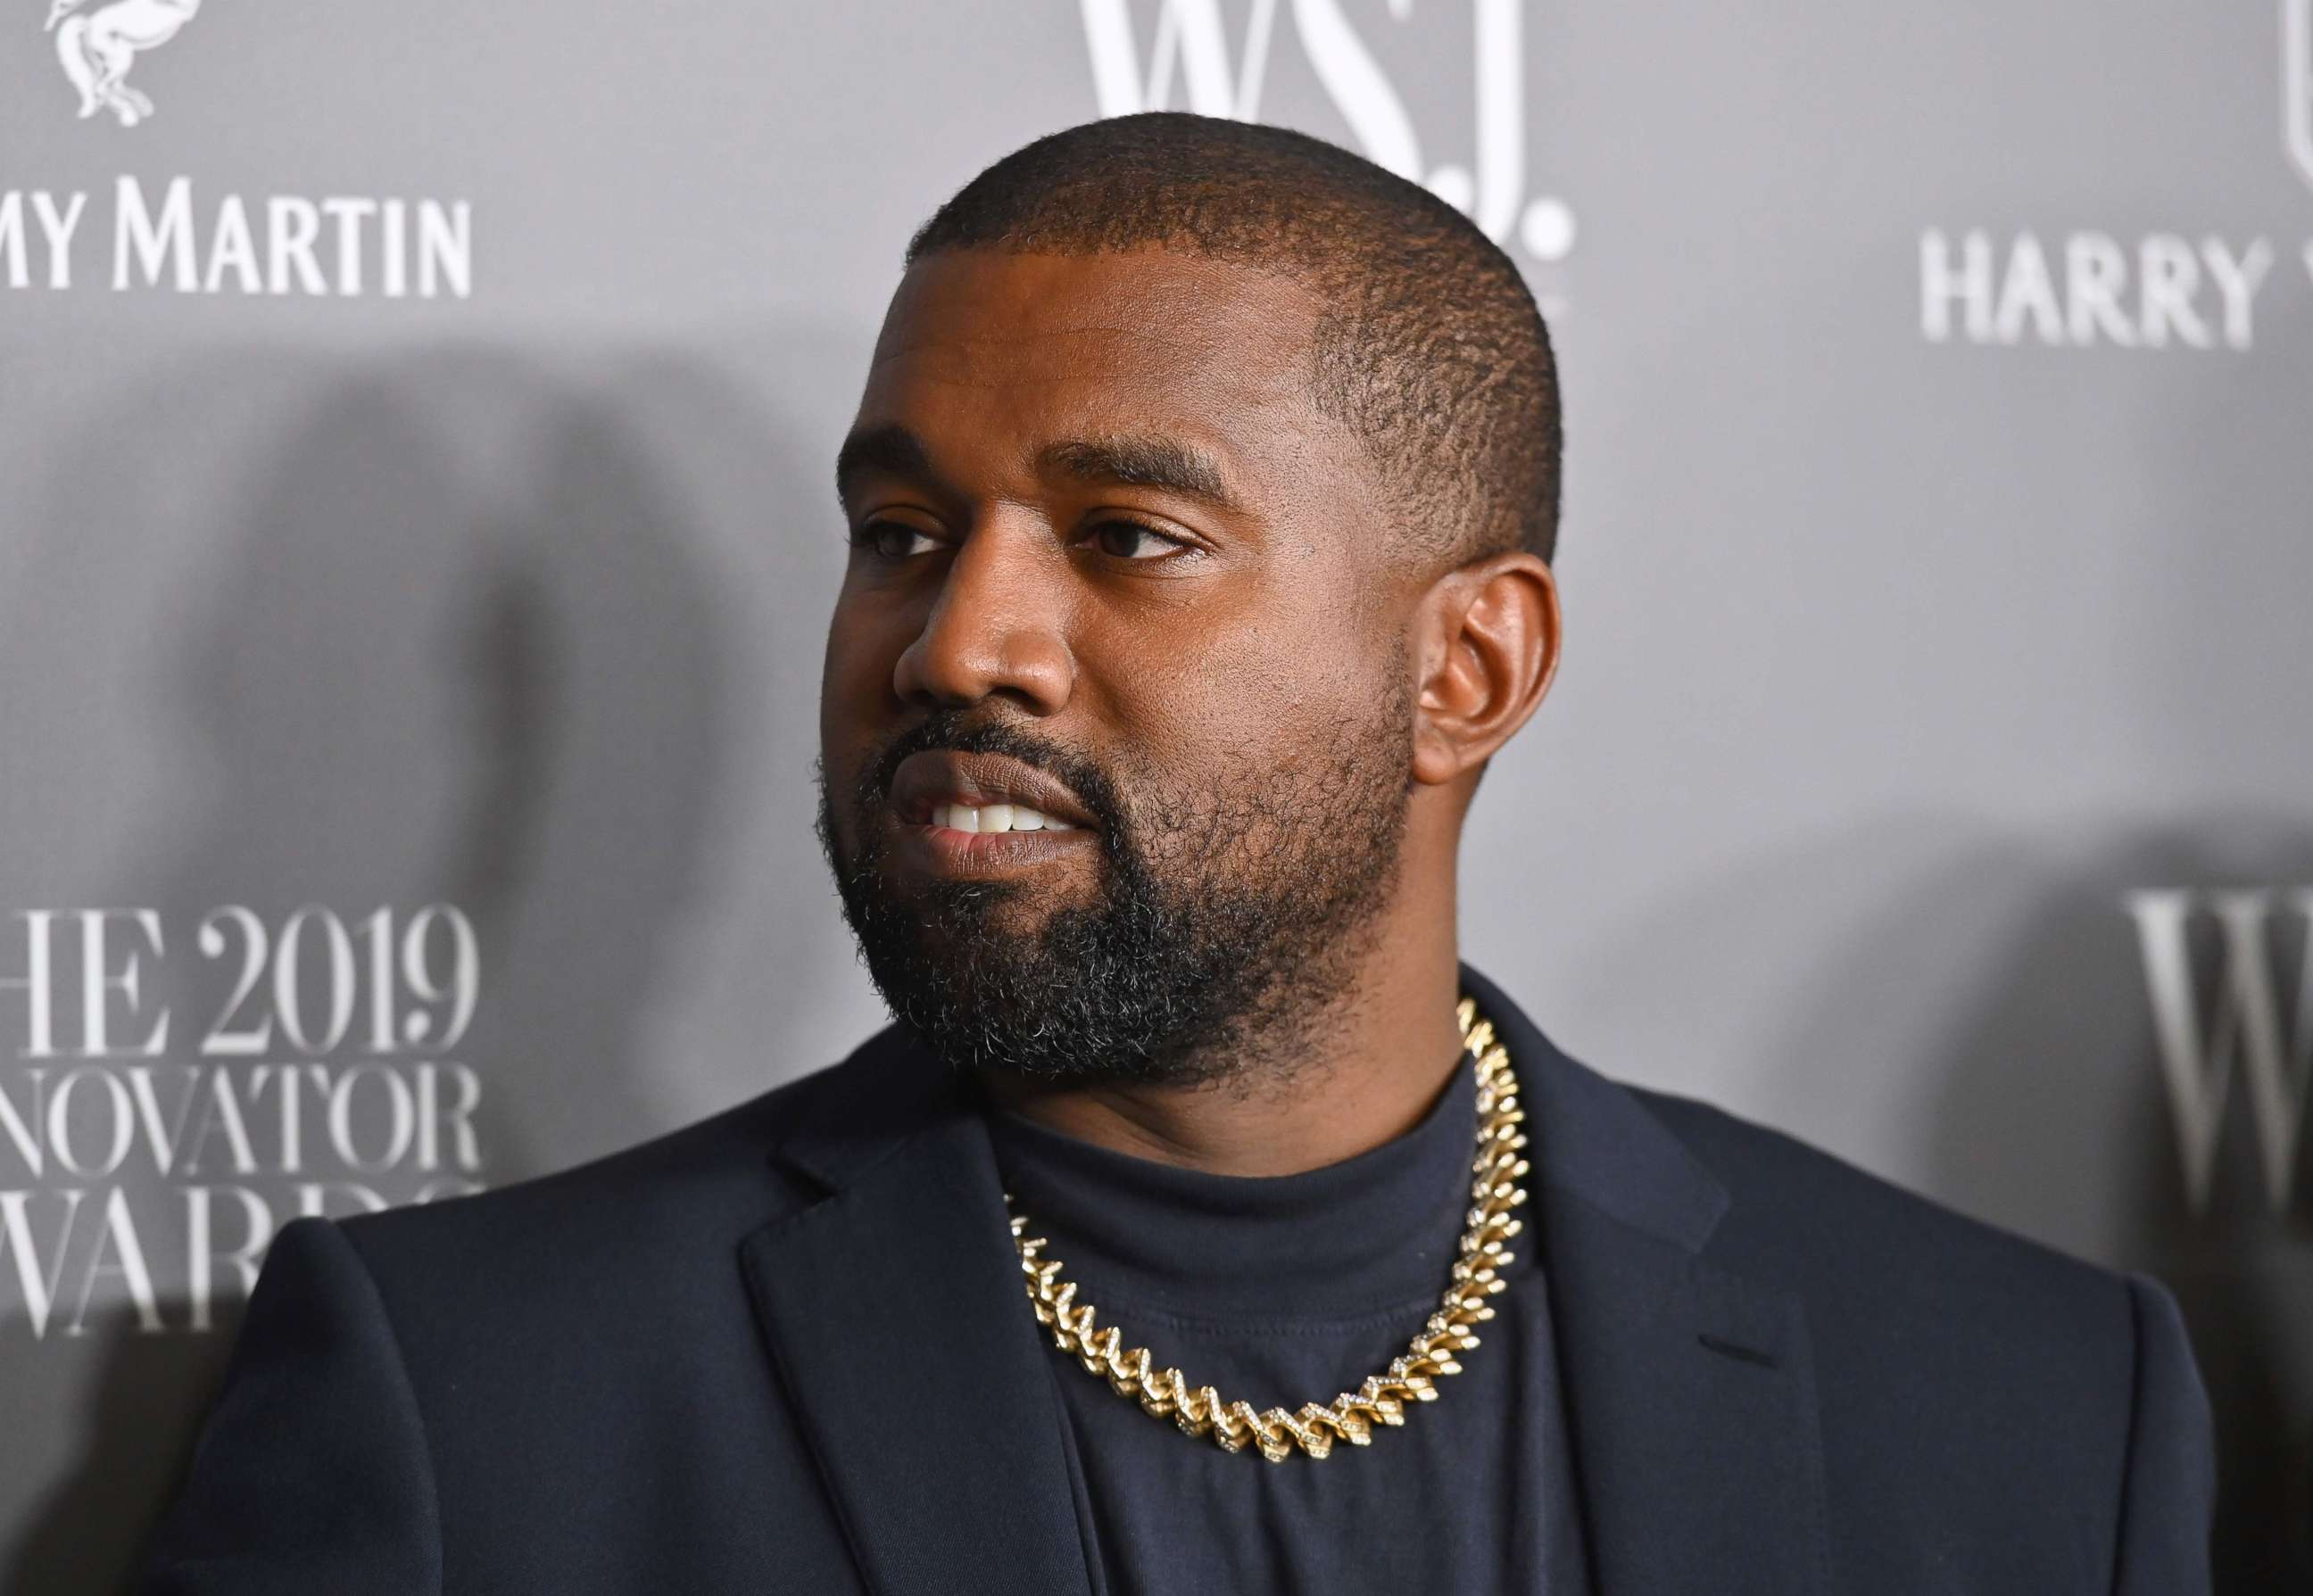 Kanye West Surprises Miami Club-Goers With Impromptu Performance During DJ Khaled’s Set